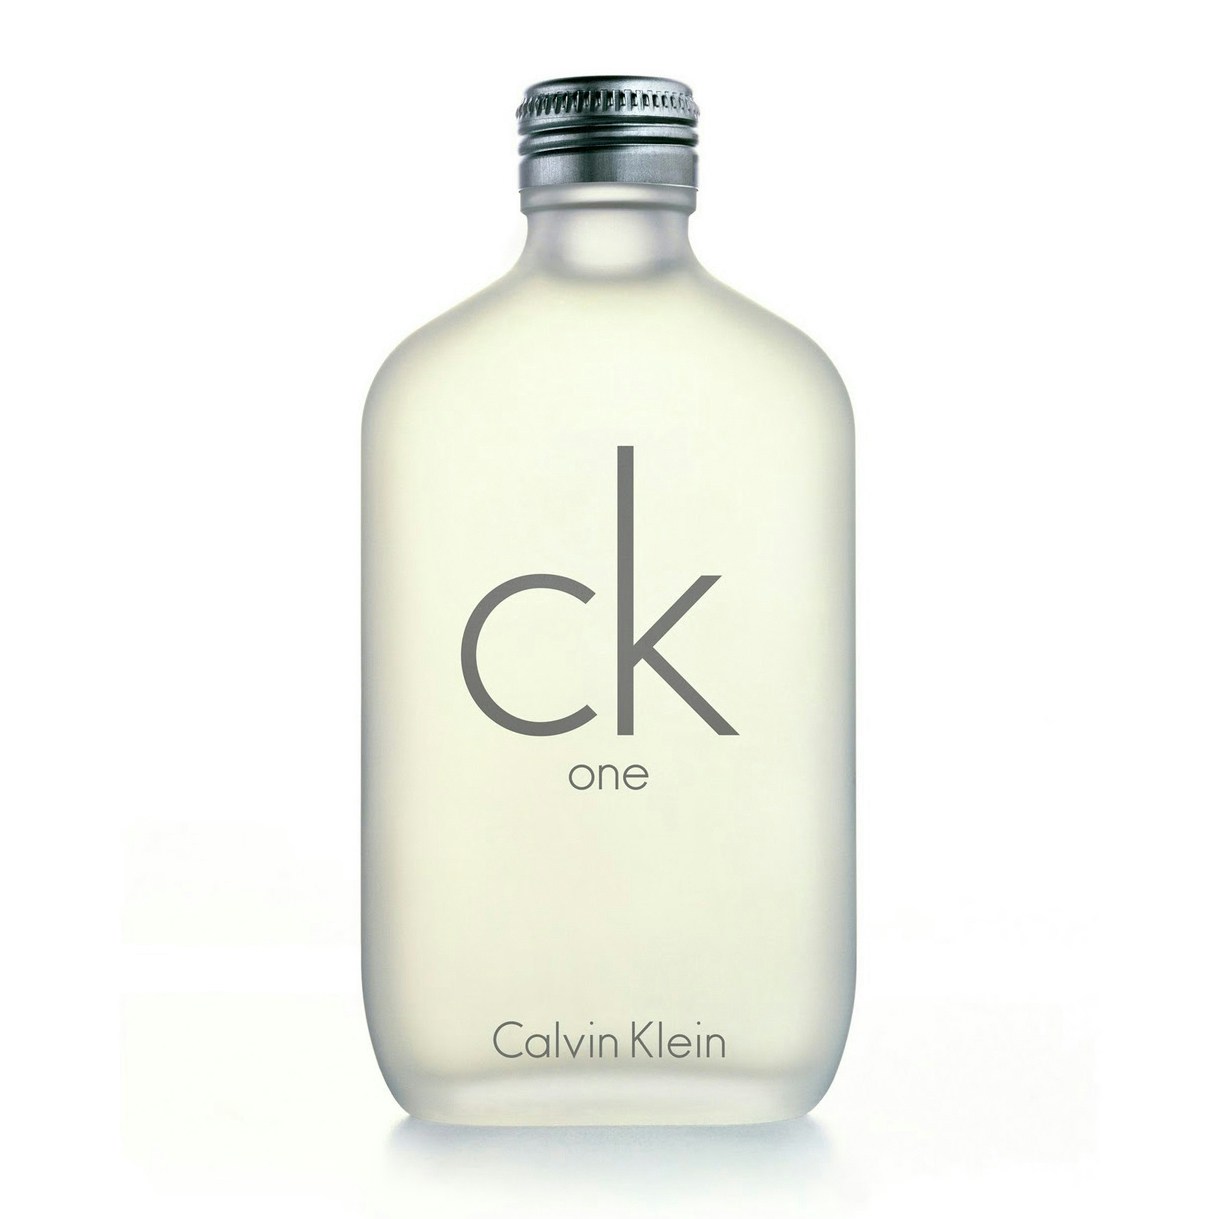 Calvin Klein - CK One - Eau De Toilette Spray 200ml